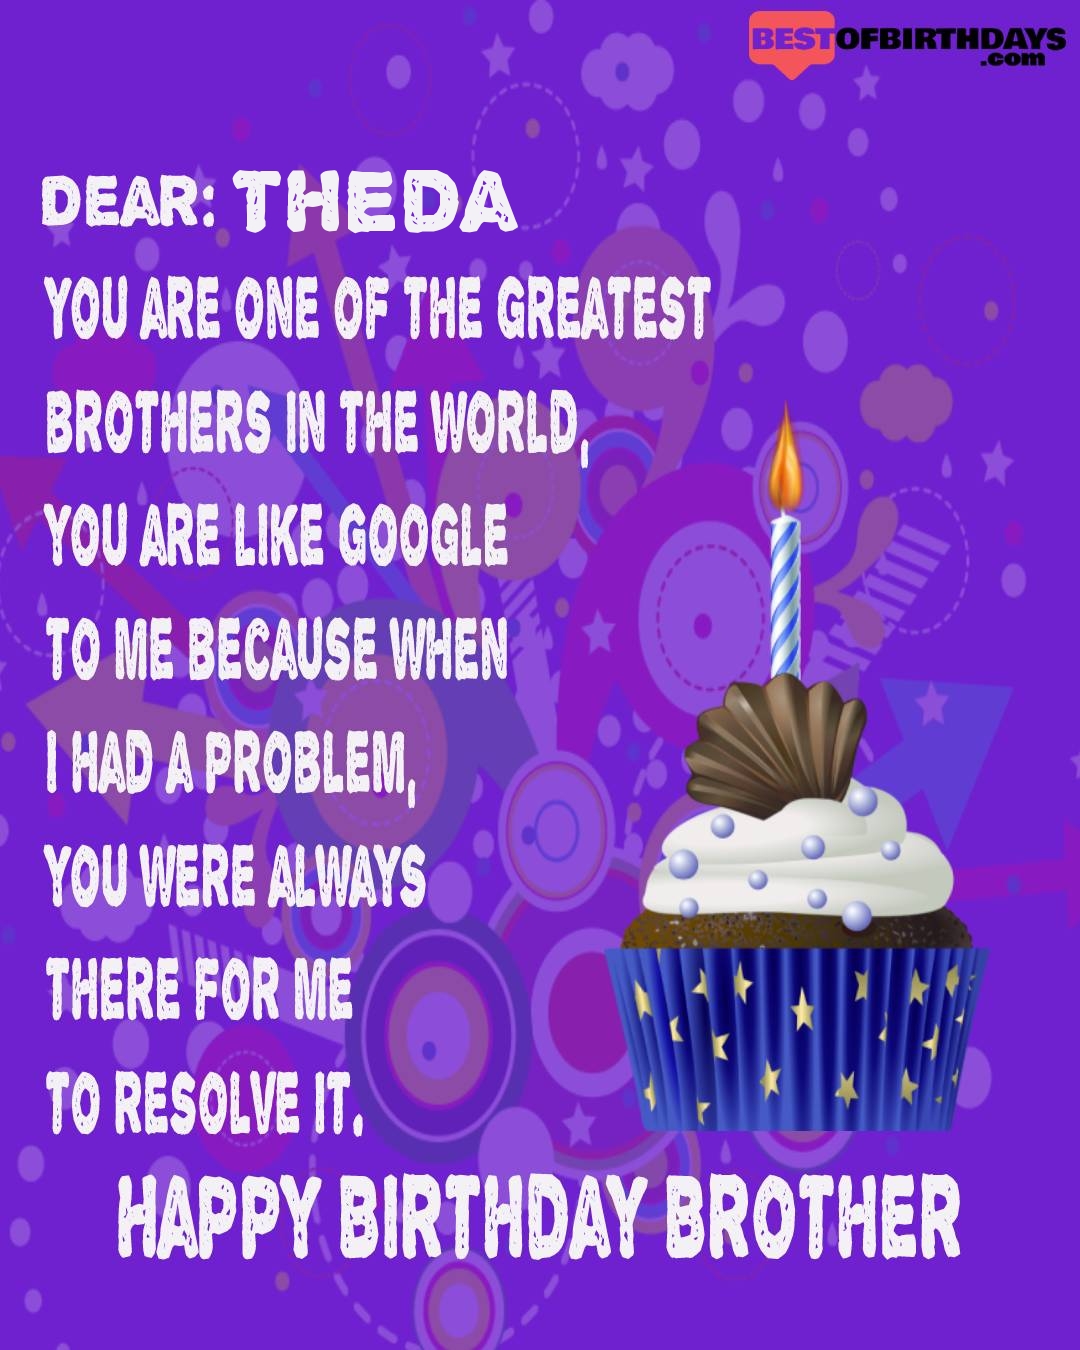 Happy birthday theda bhai brother bro